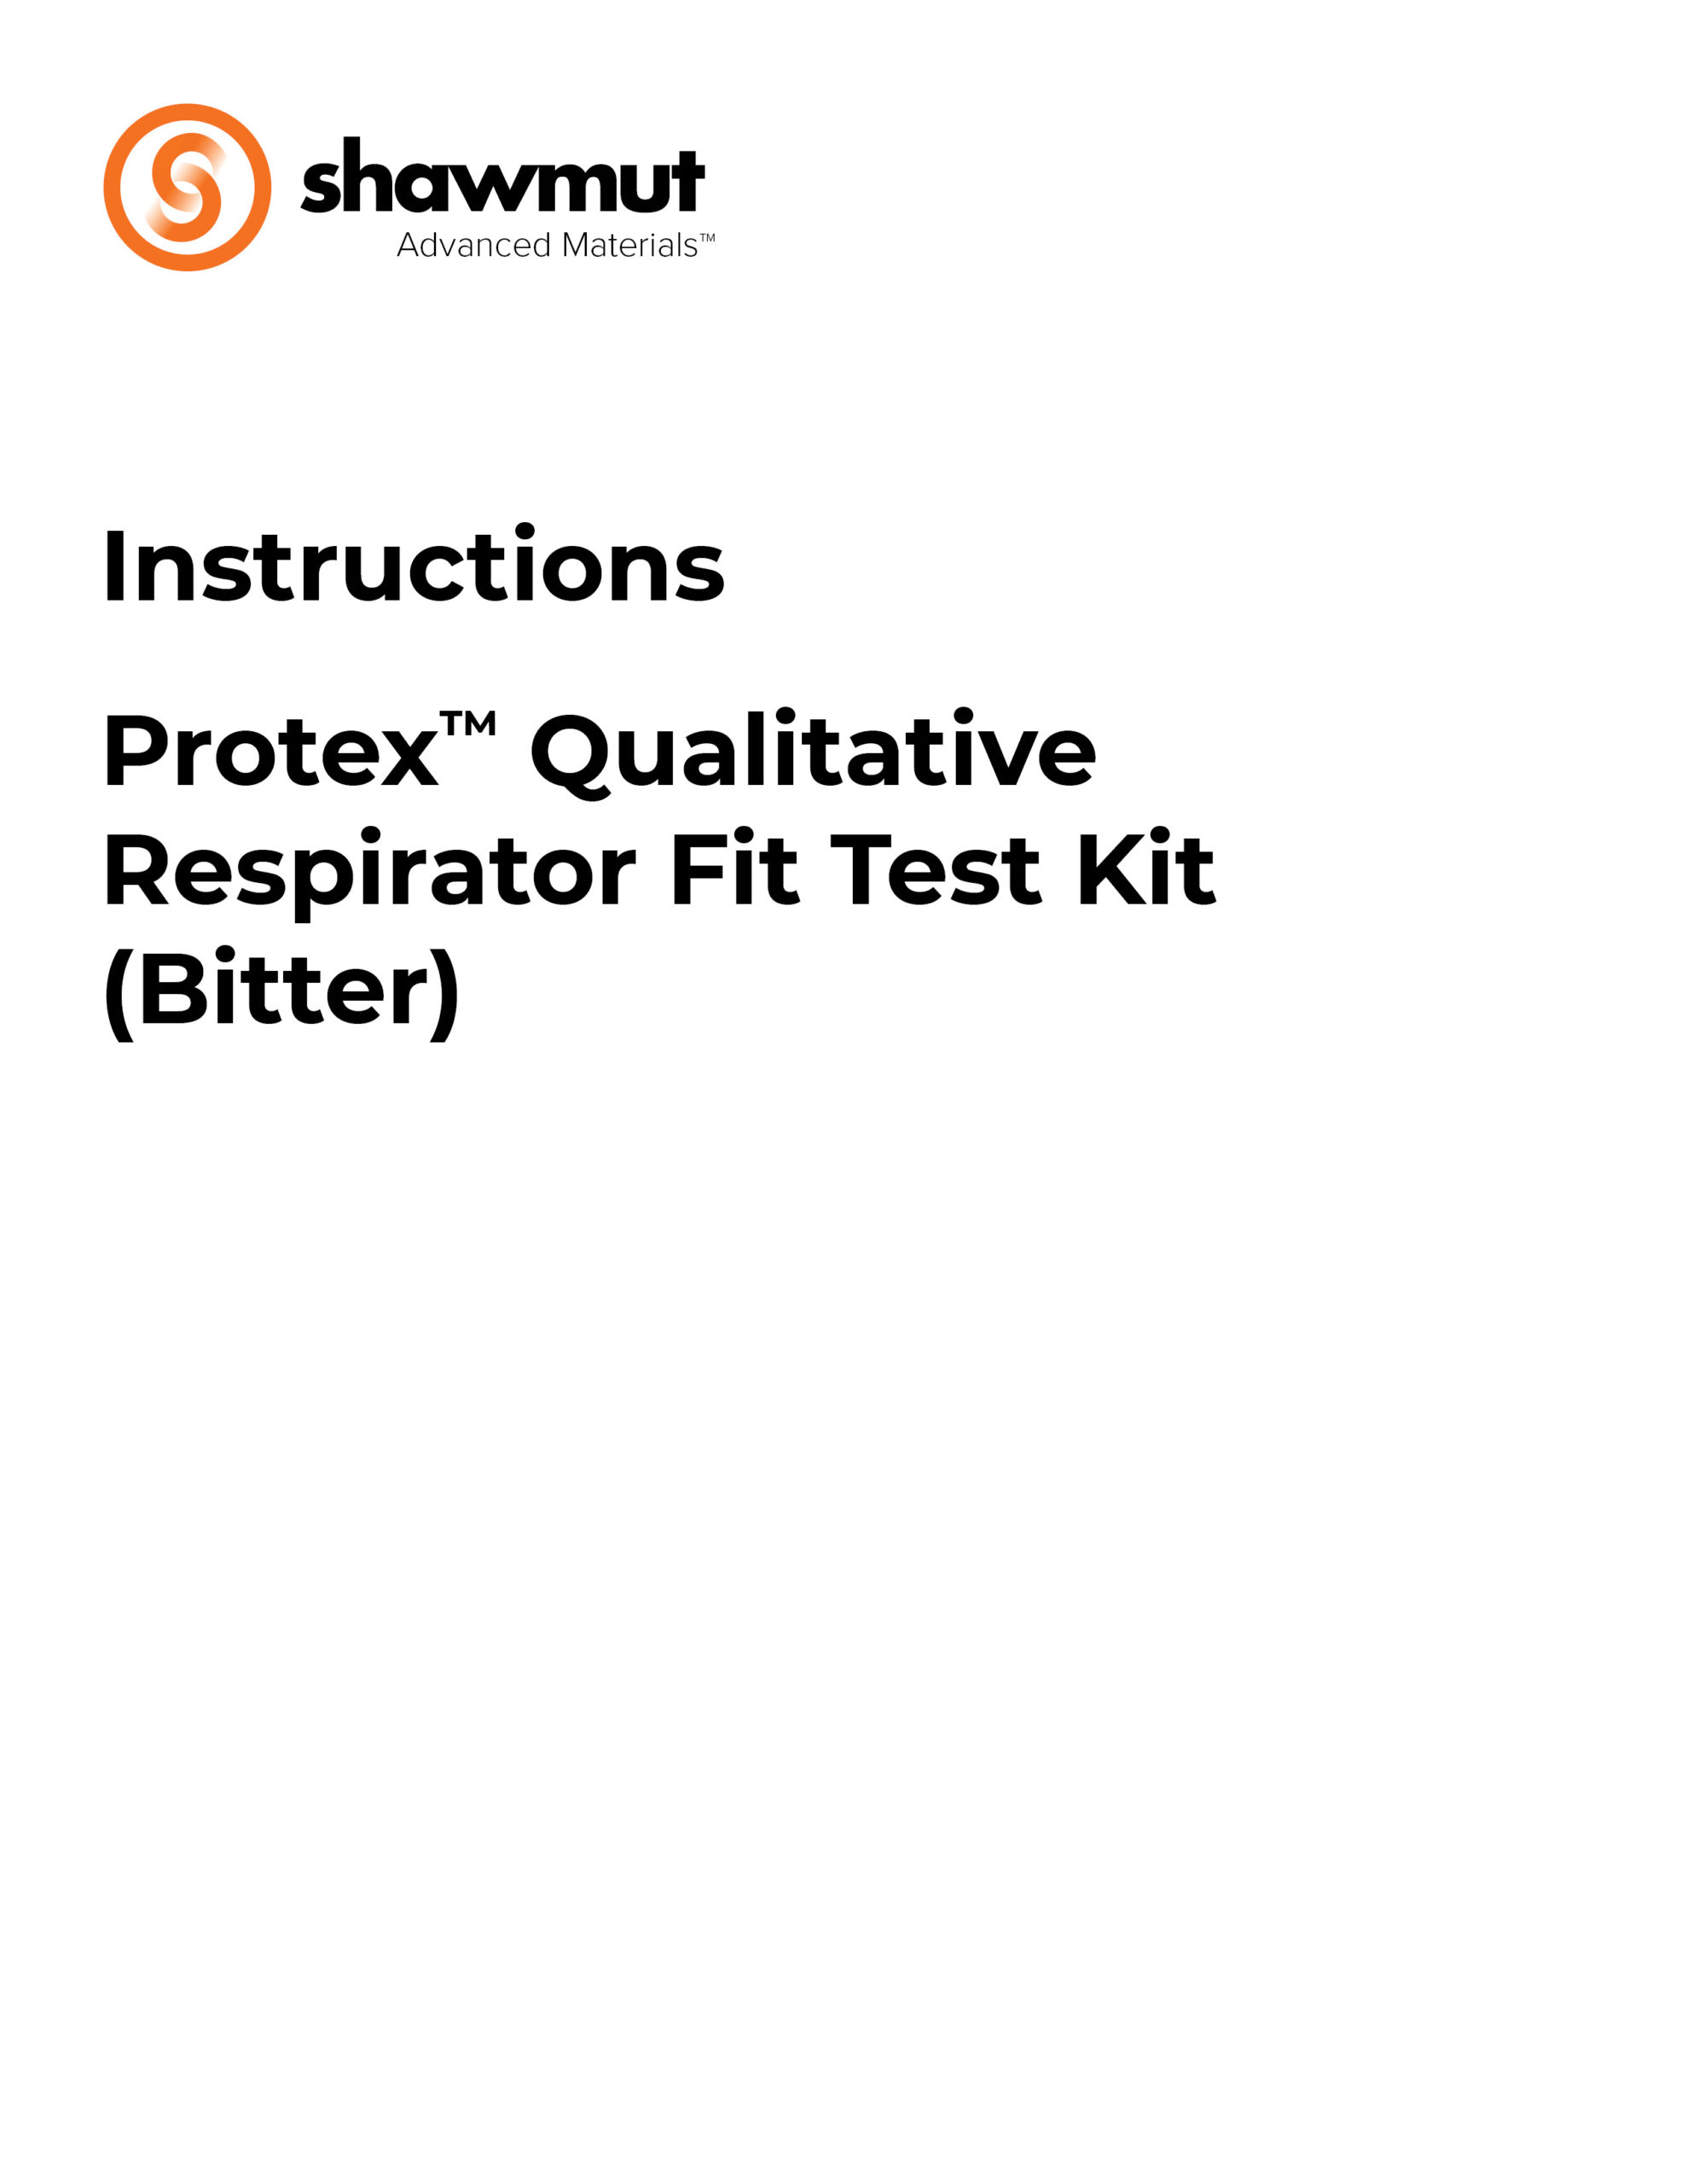 Protex™ Qualitative Respirator Fit Test Kit Instructions_Bitter